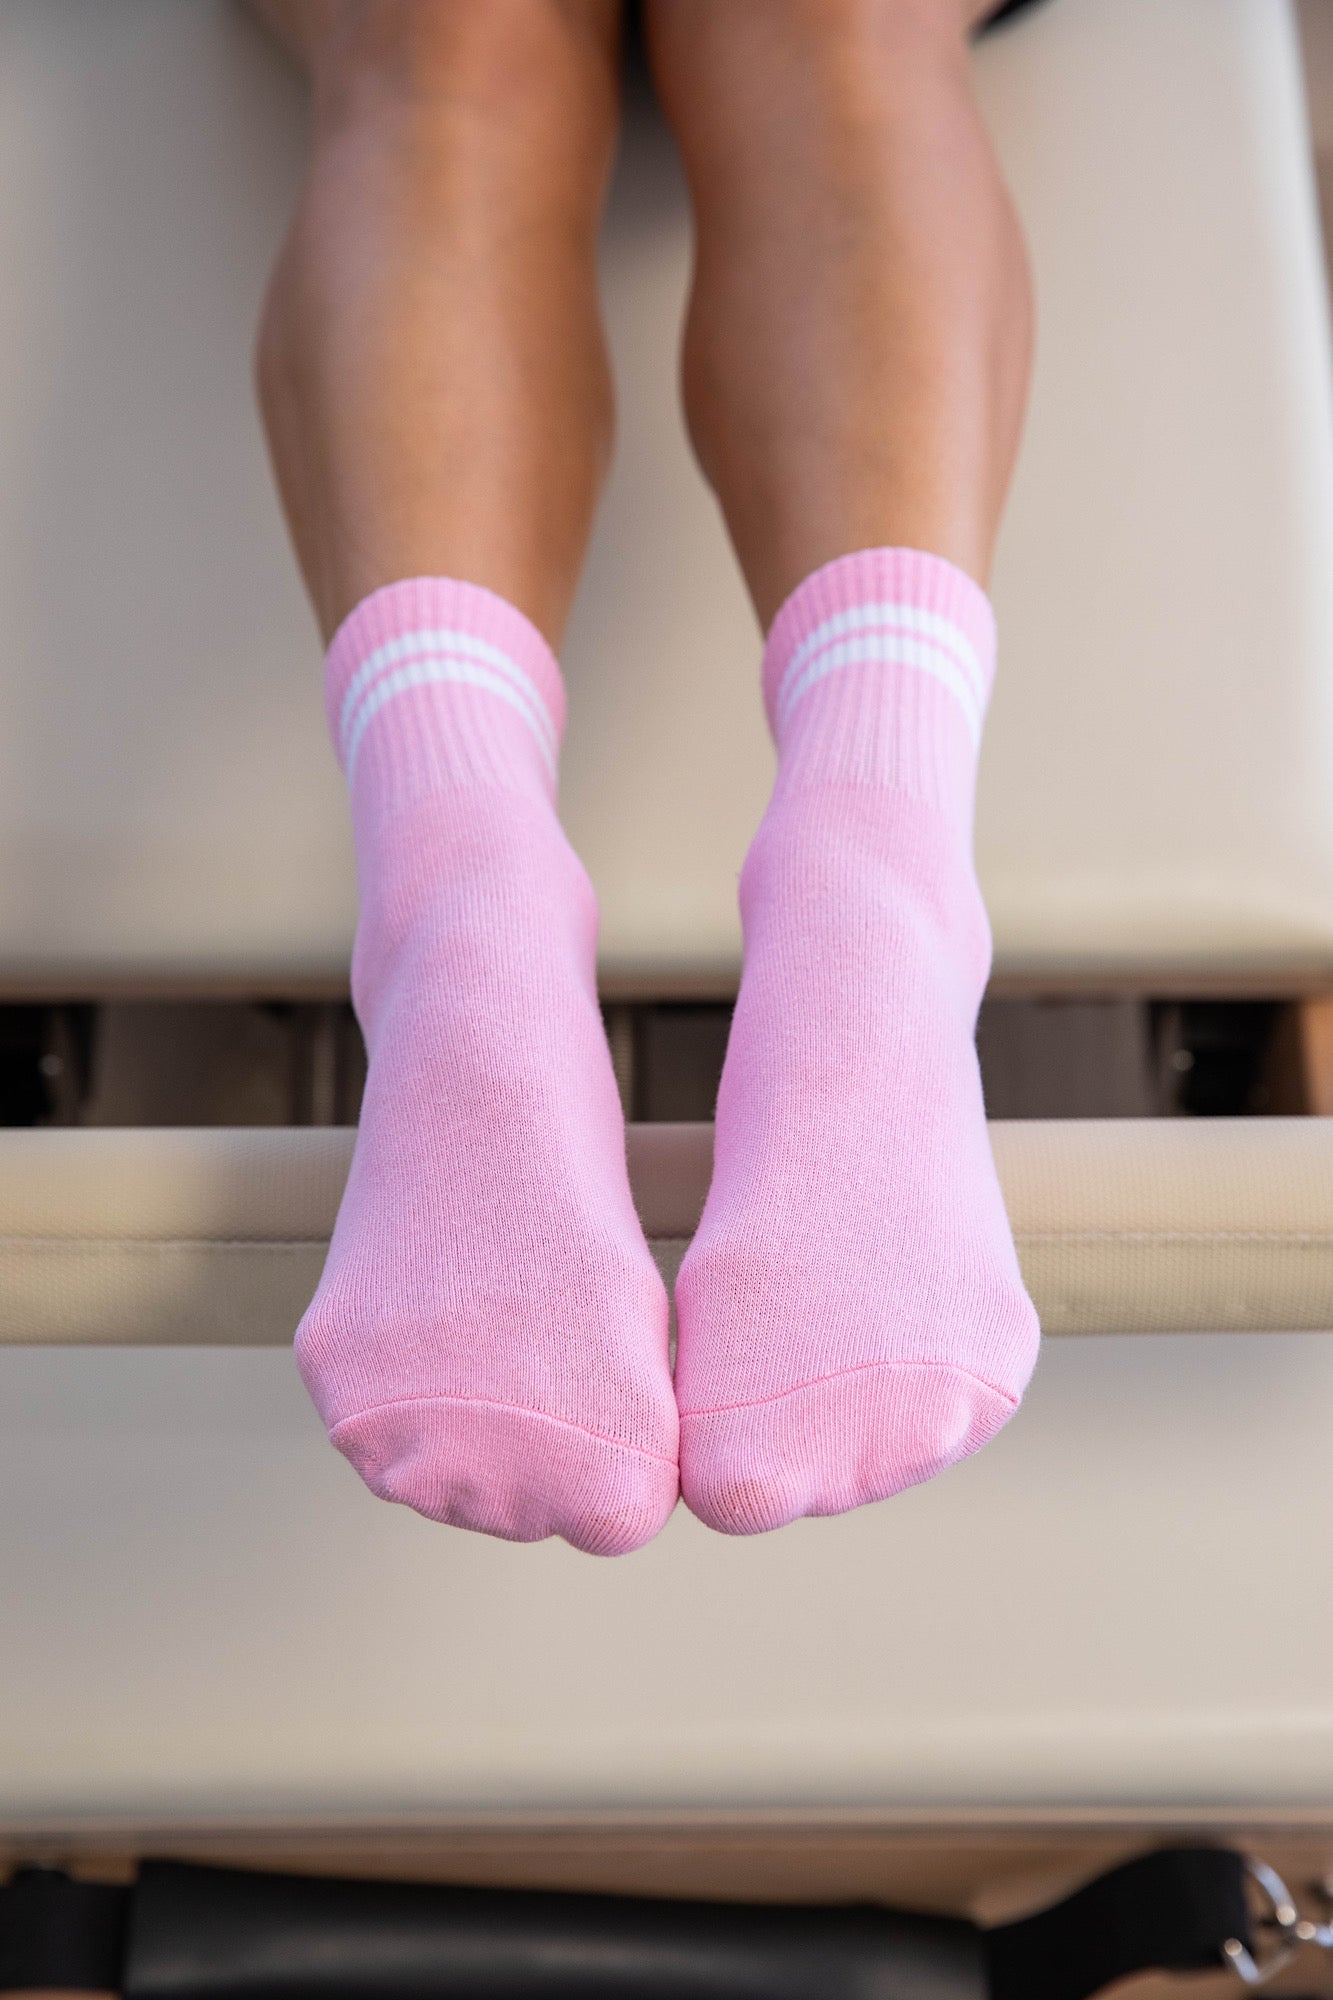 Striped Crew Grip Socks  Non-Slip Yoga & Pilates - Cheeky Winx